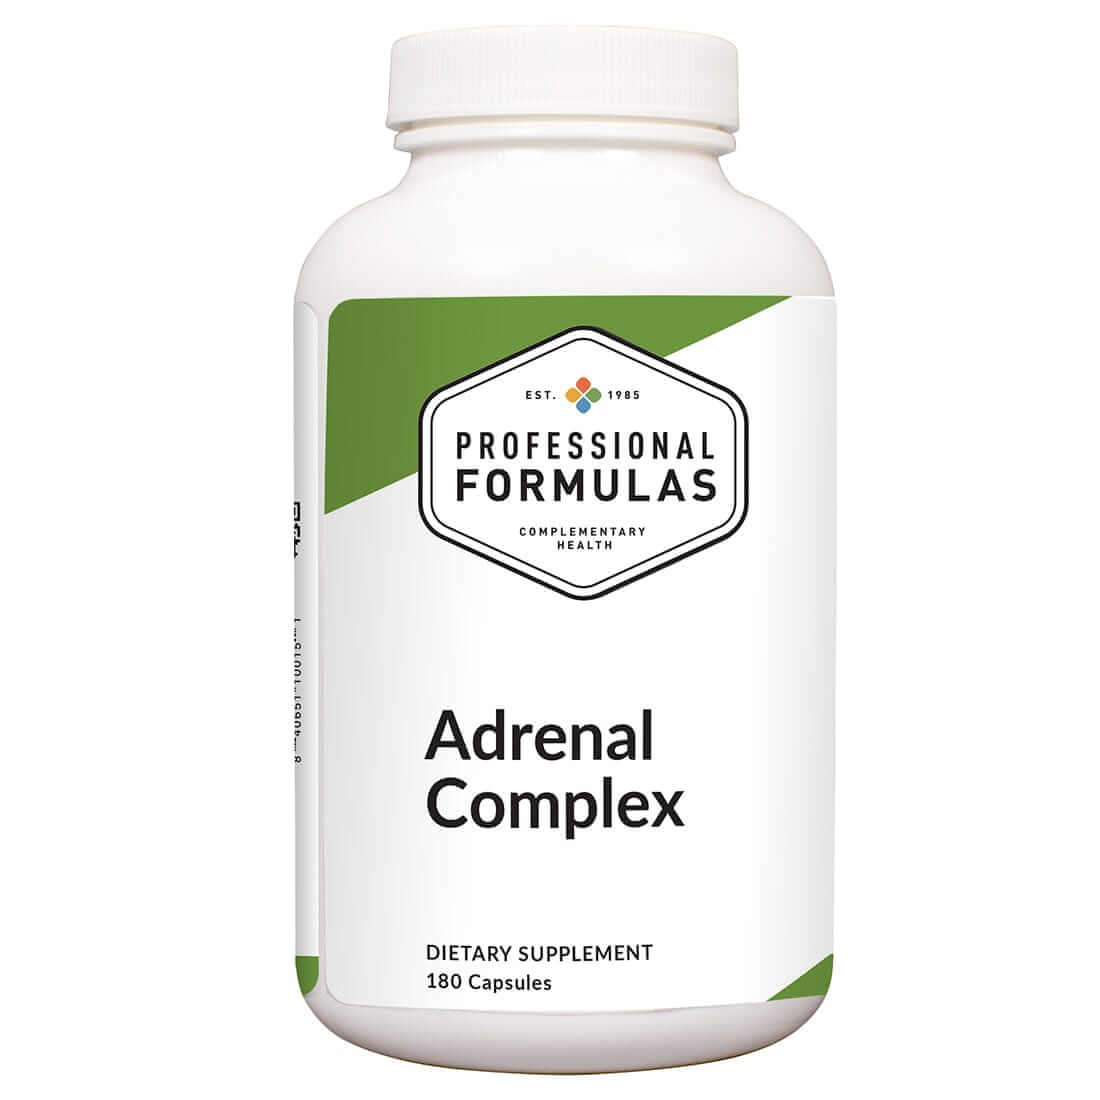 Adrenal Complex - 180 Capsules Professional Formulas Supplement - Conners Clinic